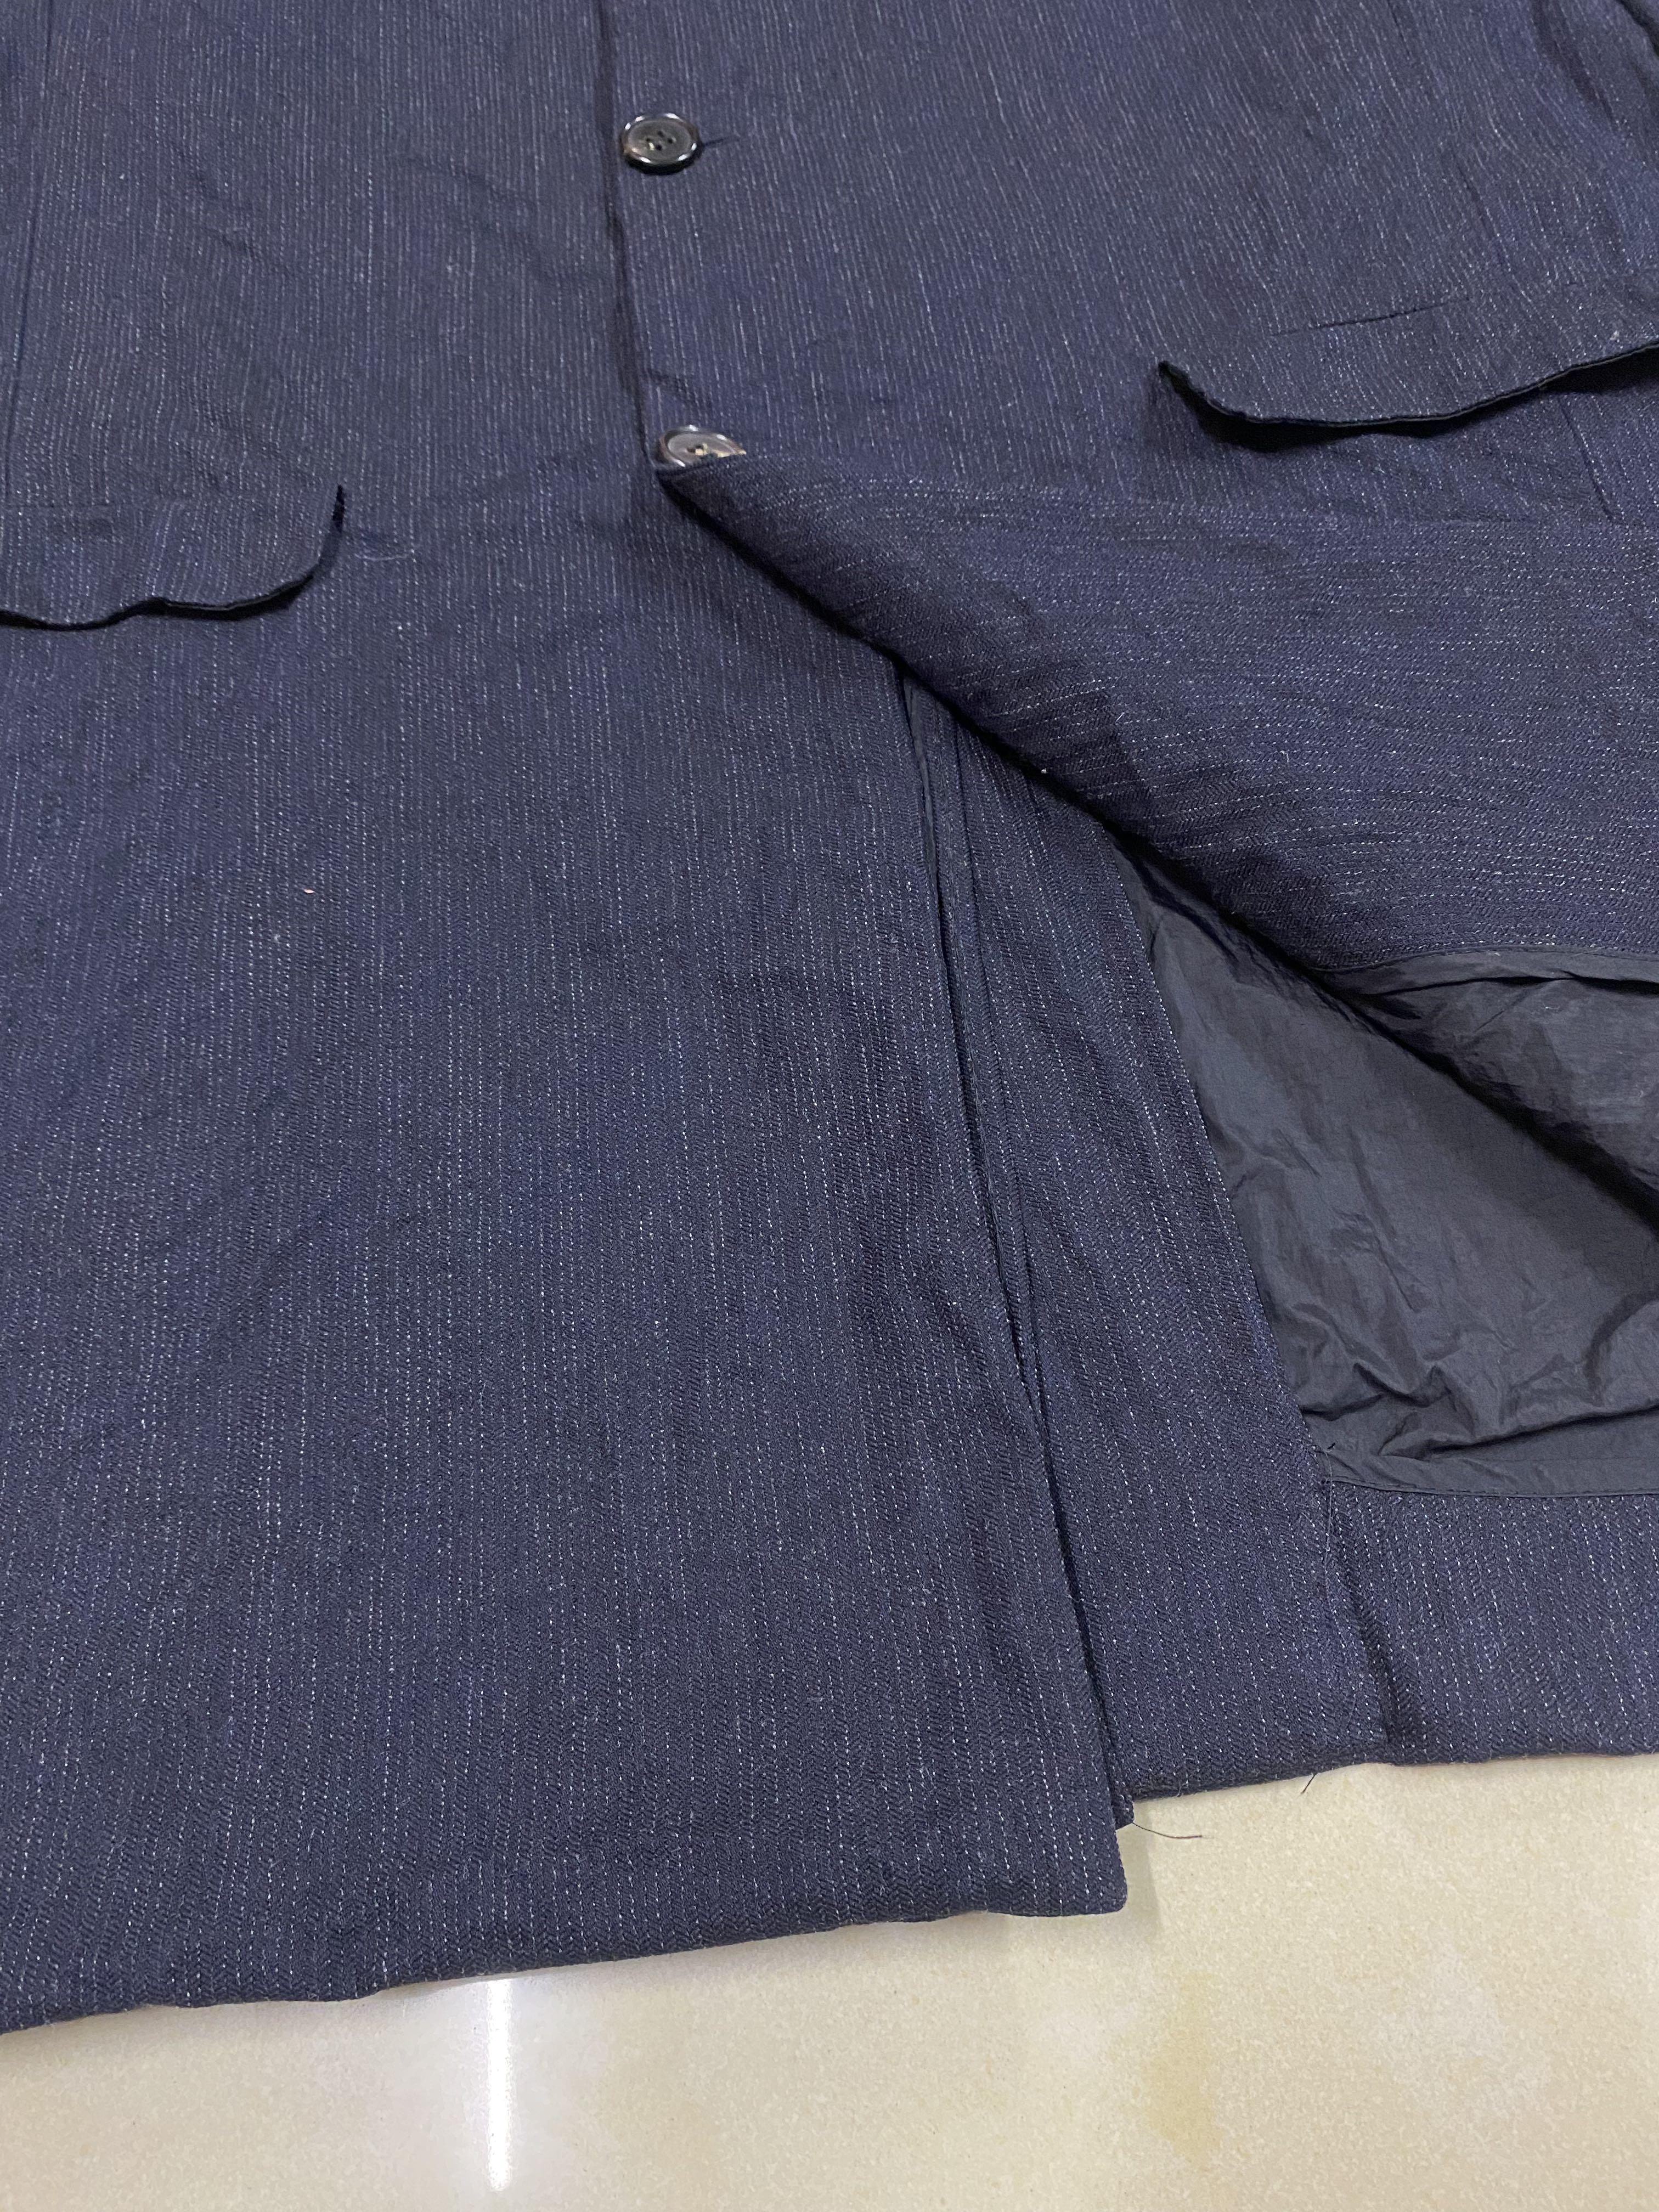 Marni Indigo Blue Coats  - 5